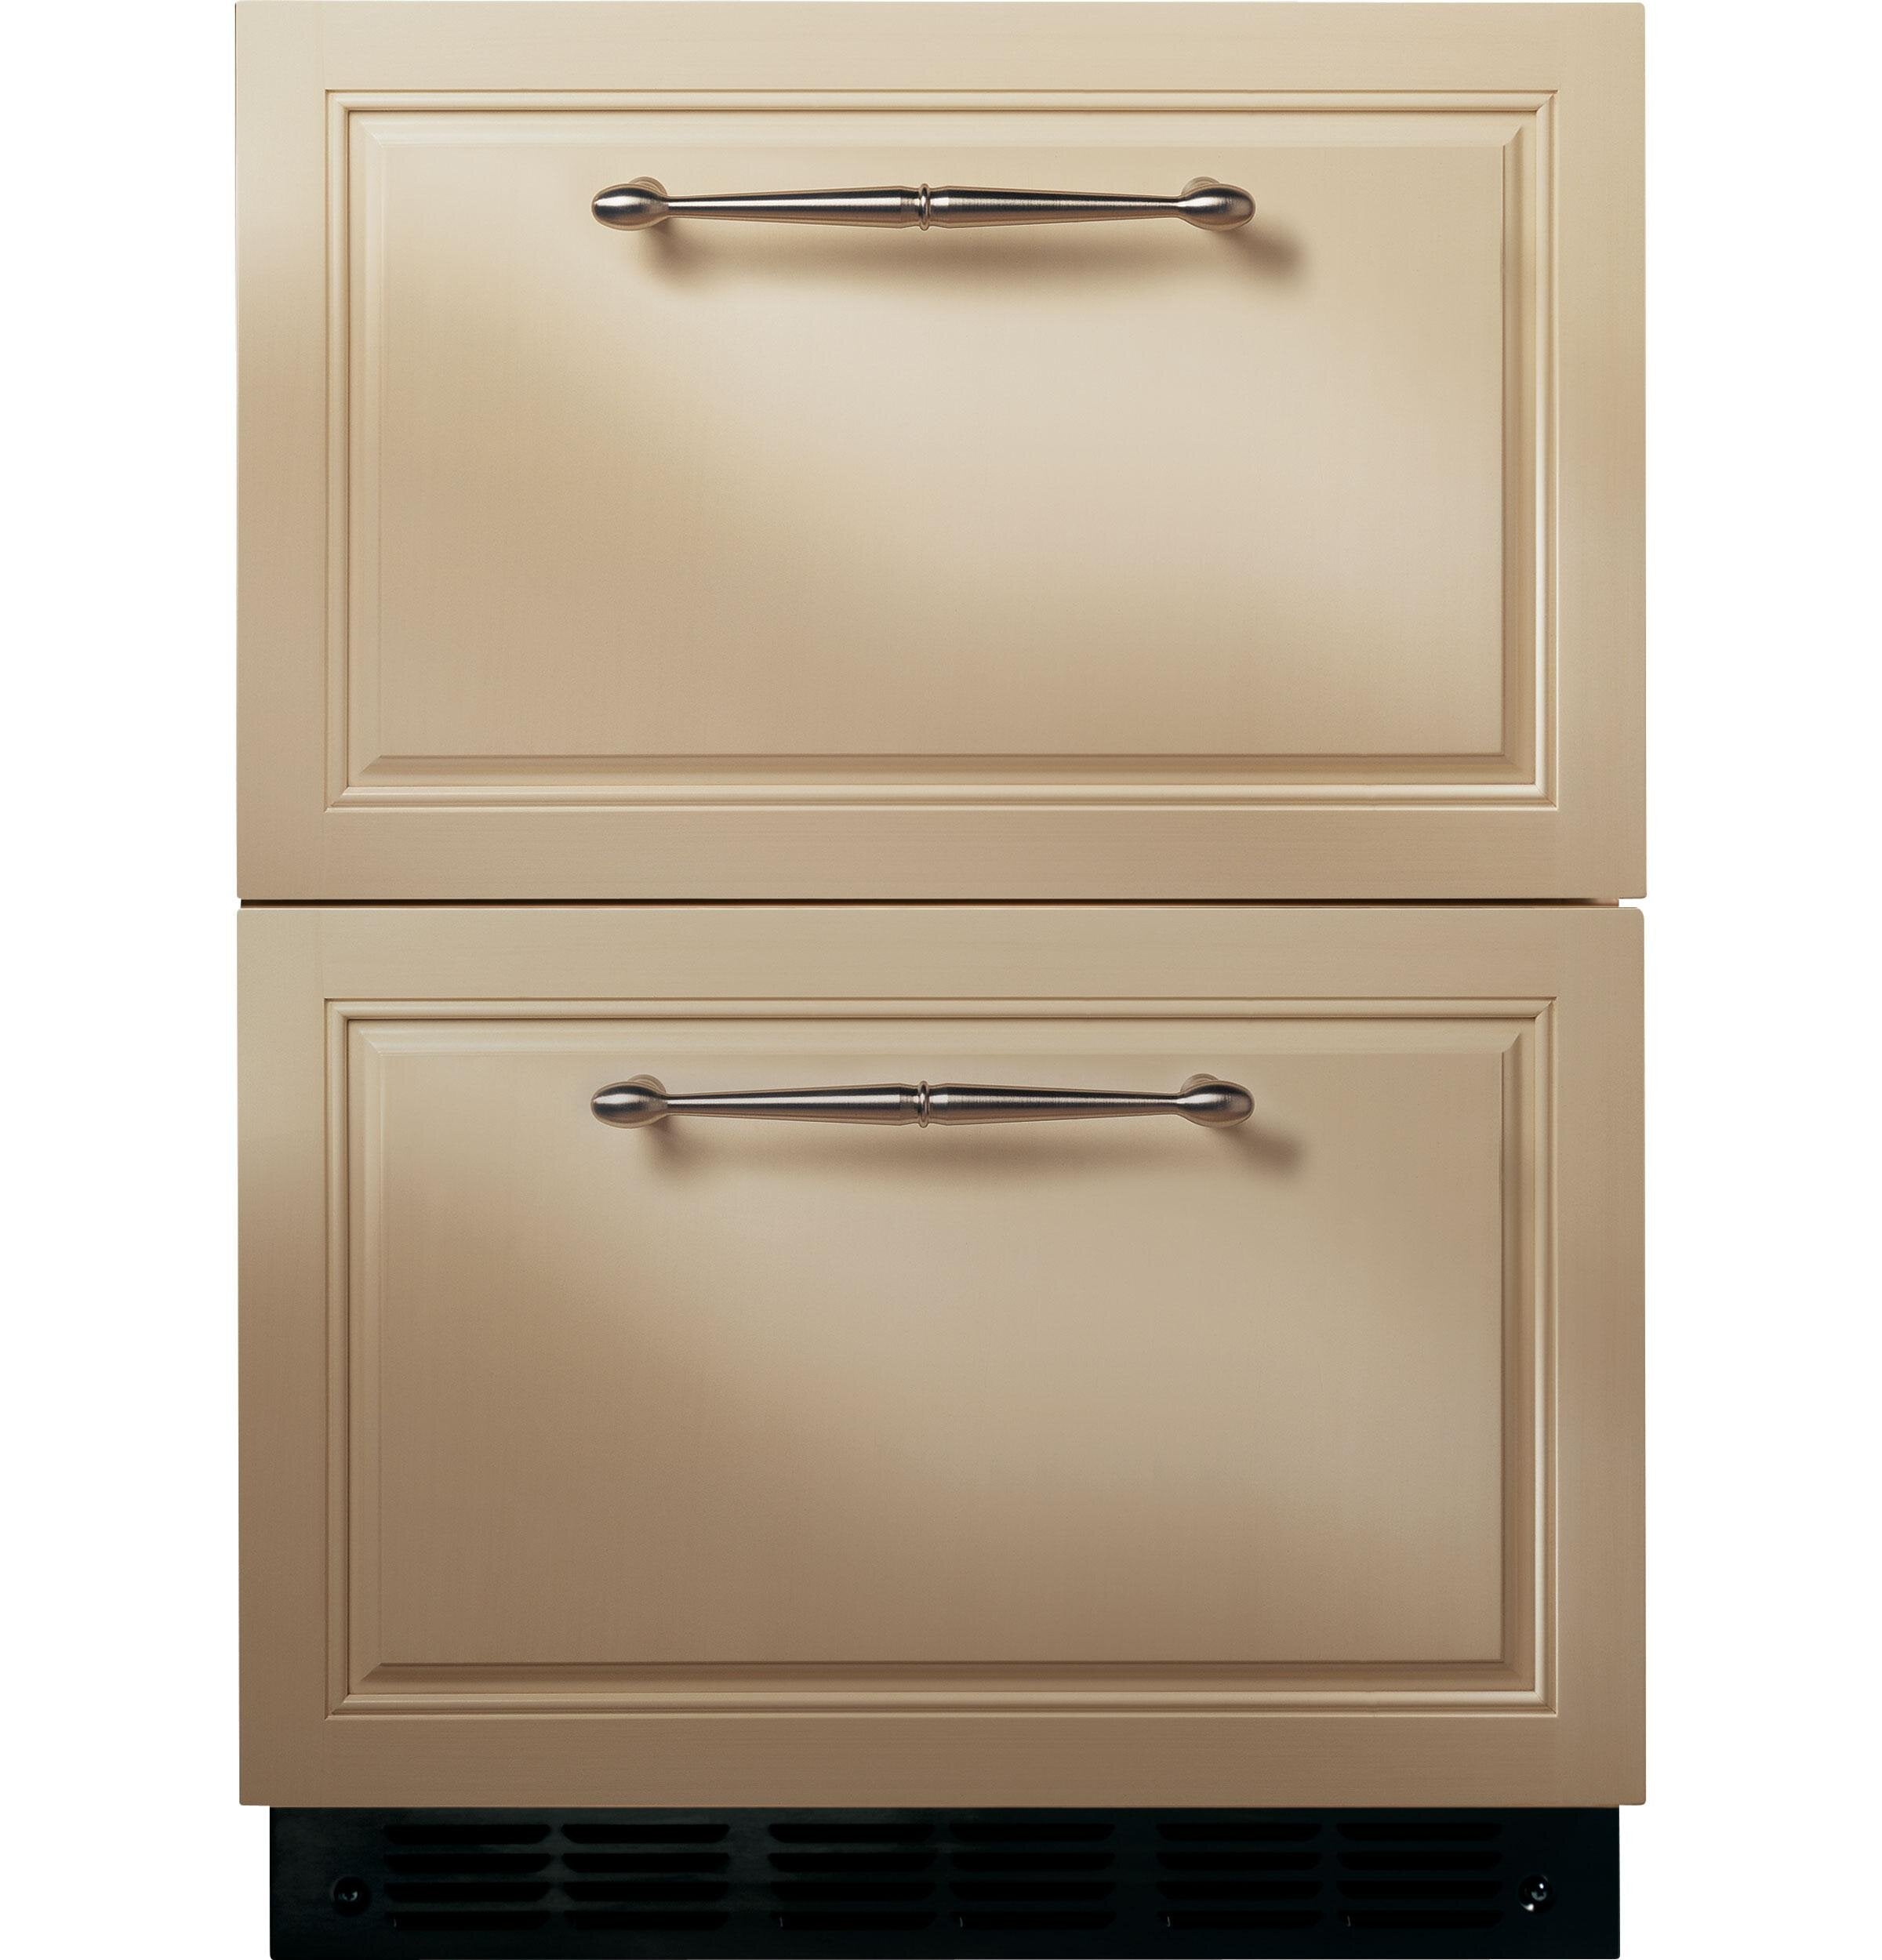 Monogram ZIDI240HII Monogram Double-Drawer Refrigerator Module